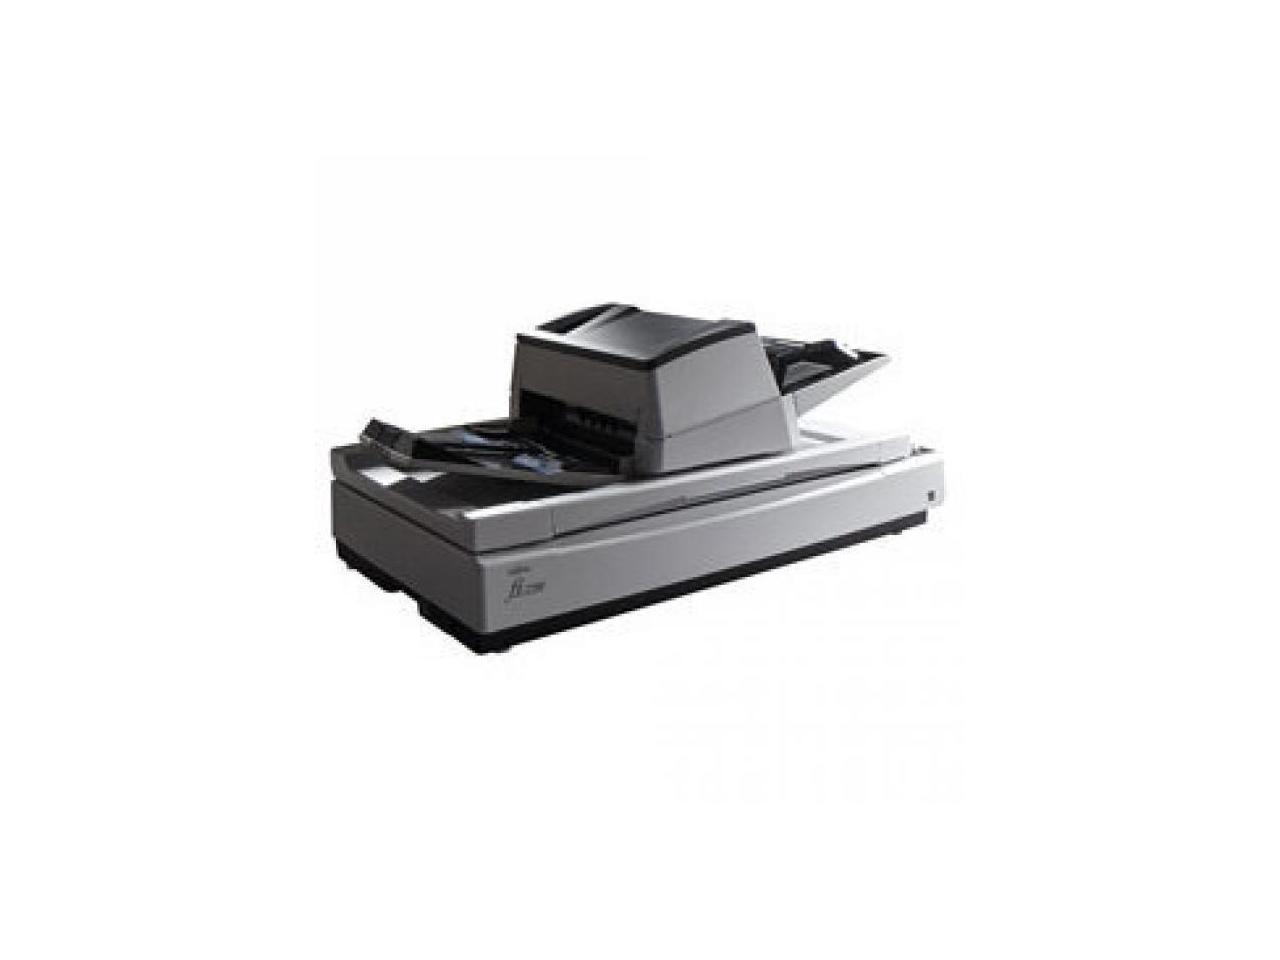 Fujitsu fi 7700 (PA03740-B005) Duplex 600 DPI x 600 DPI Production-class ADF+Flatbed document scanner